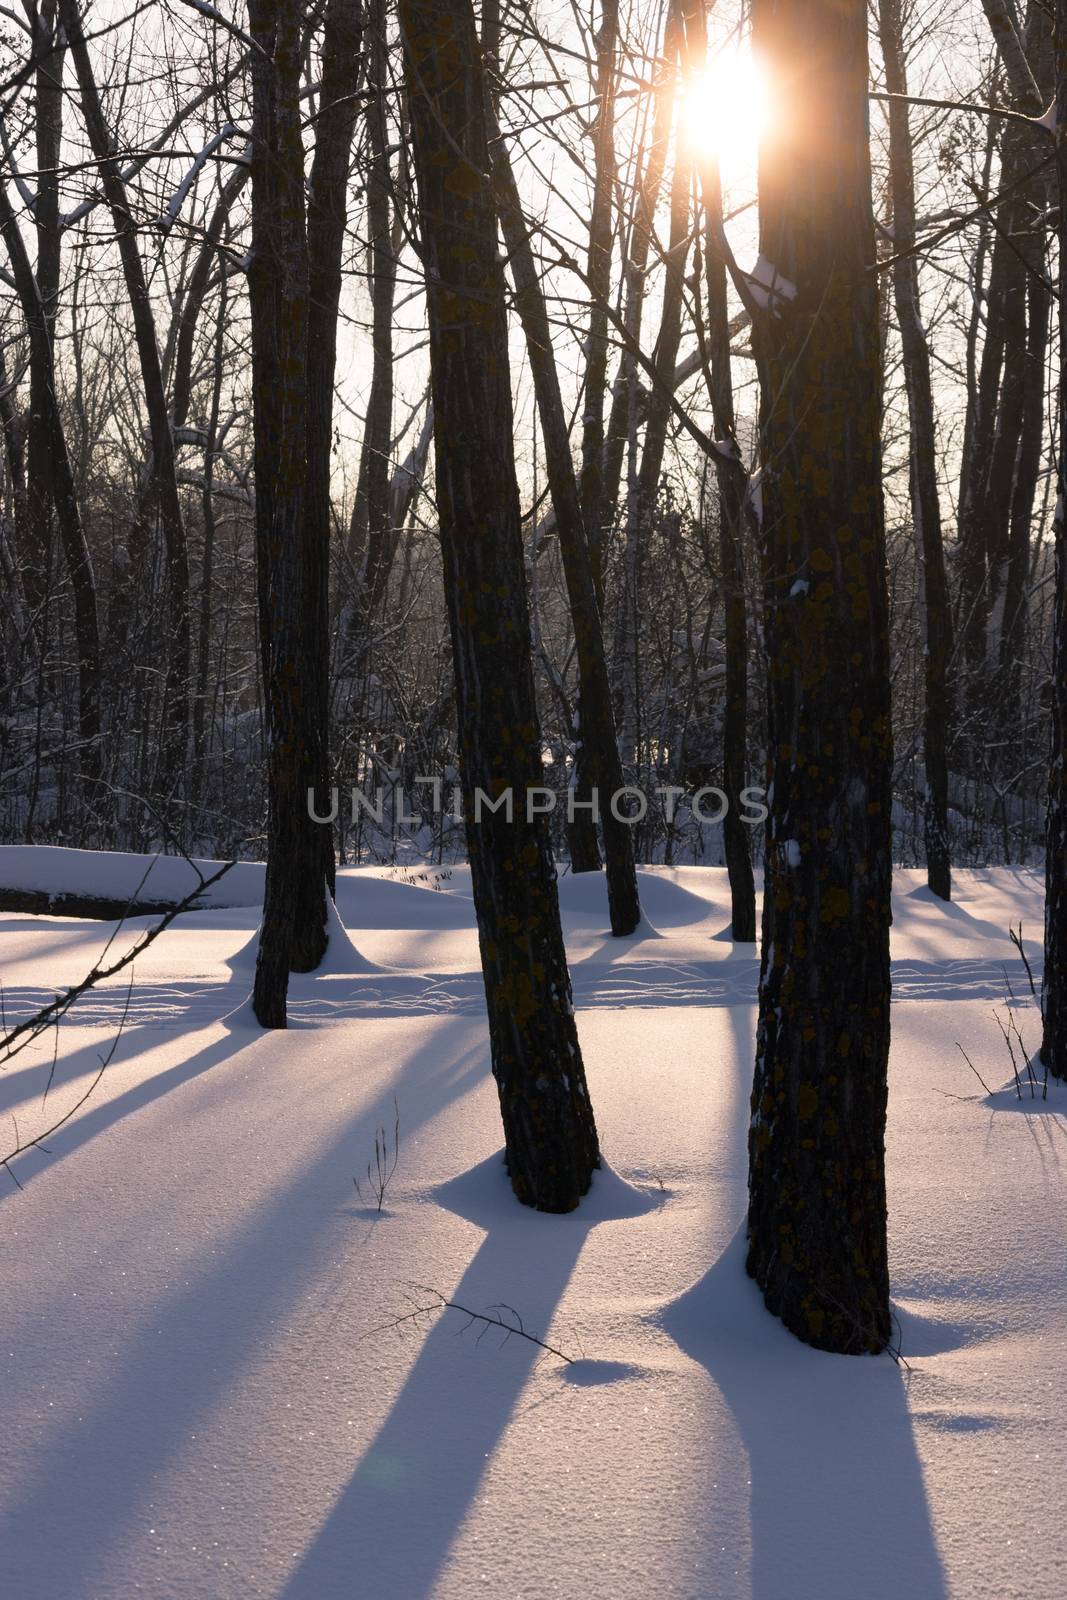 sun light through the trees by liwei12